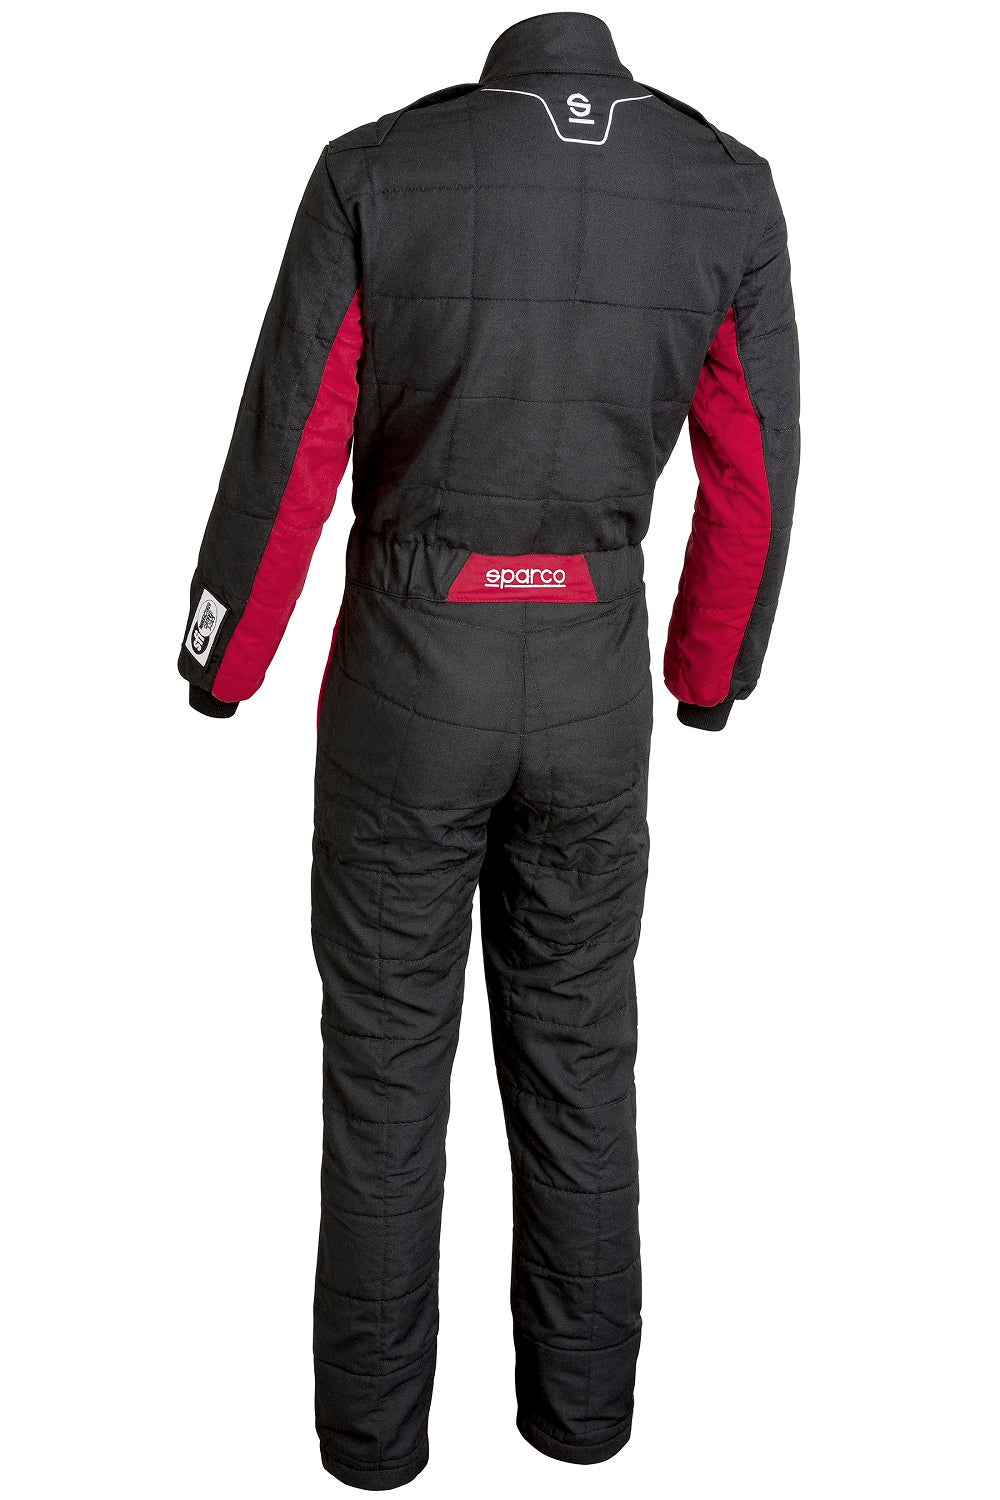 Sparco Conquest 3.0 Race Suit Black / Red Rear Image